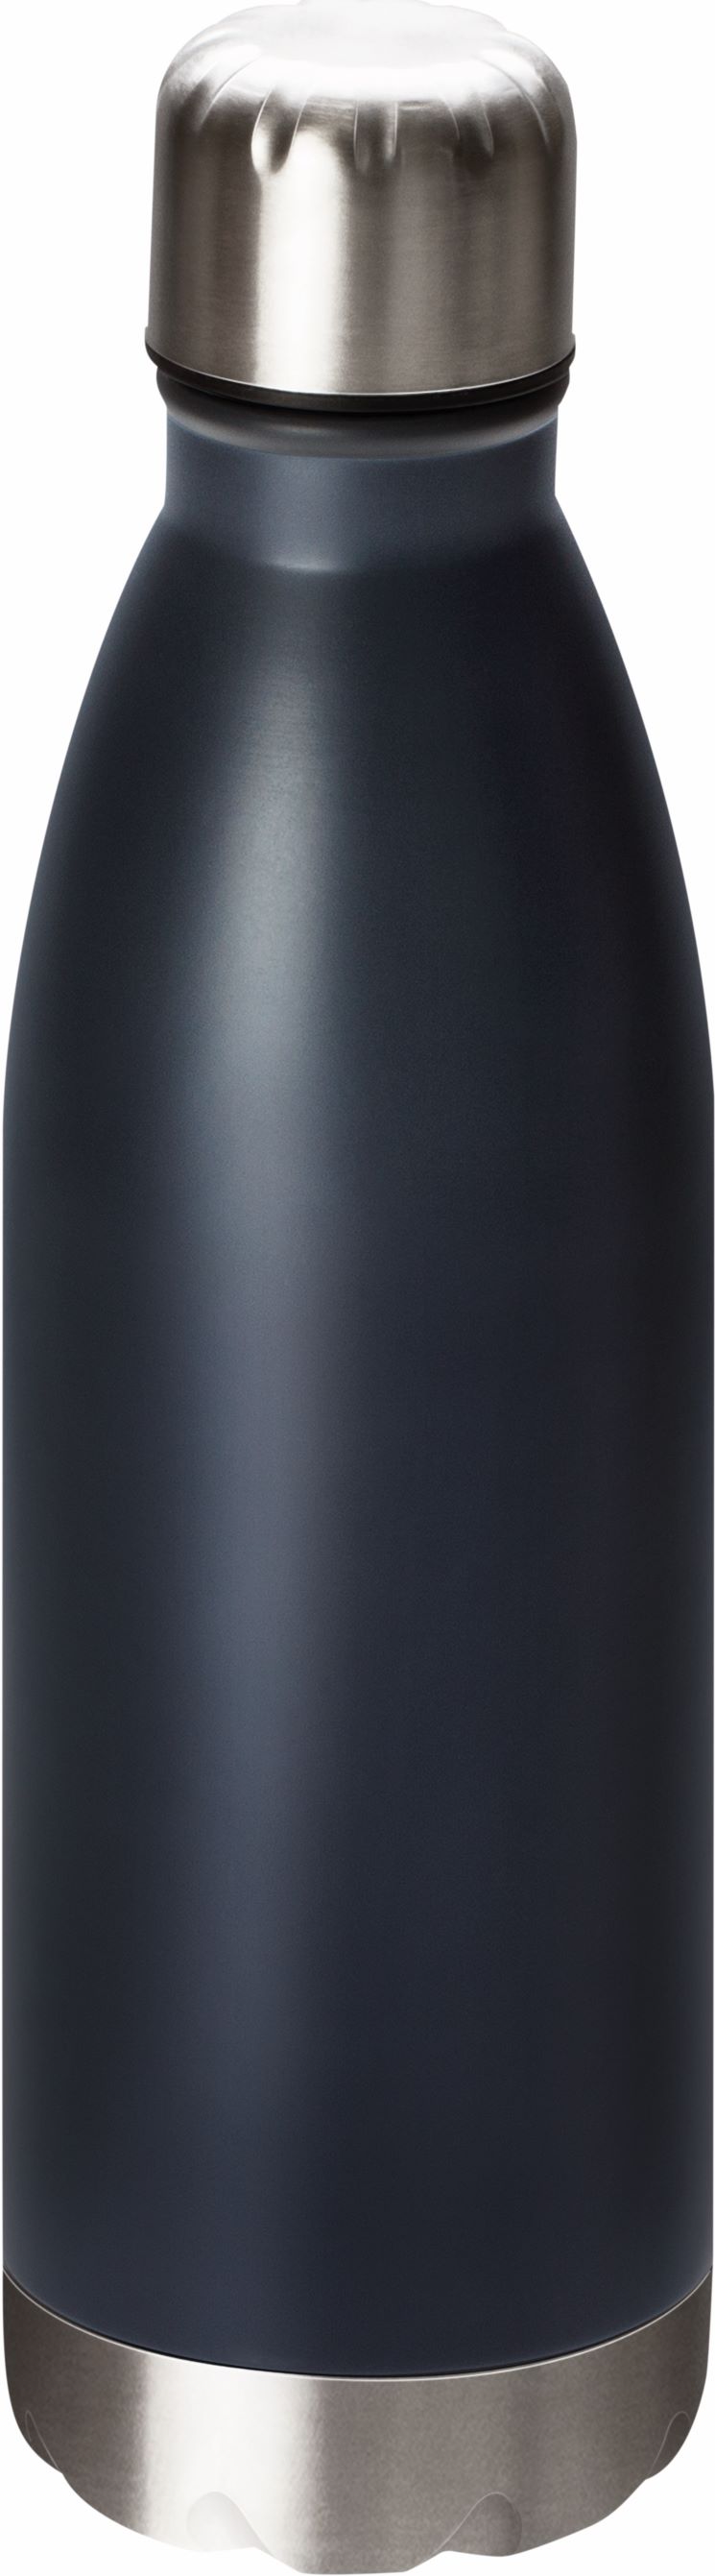 Vacuum bottle matt gray